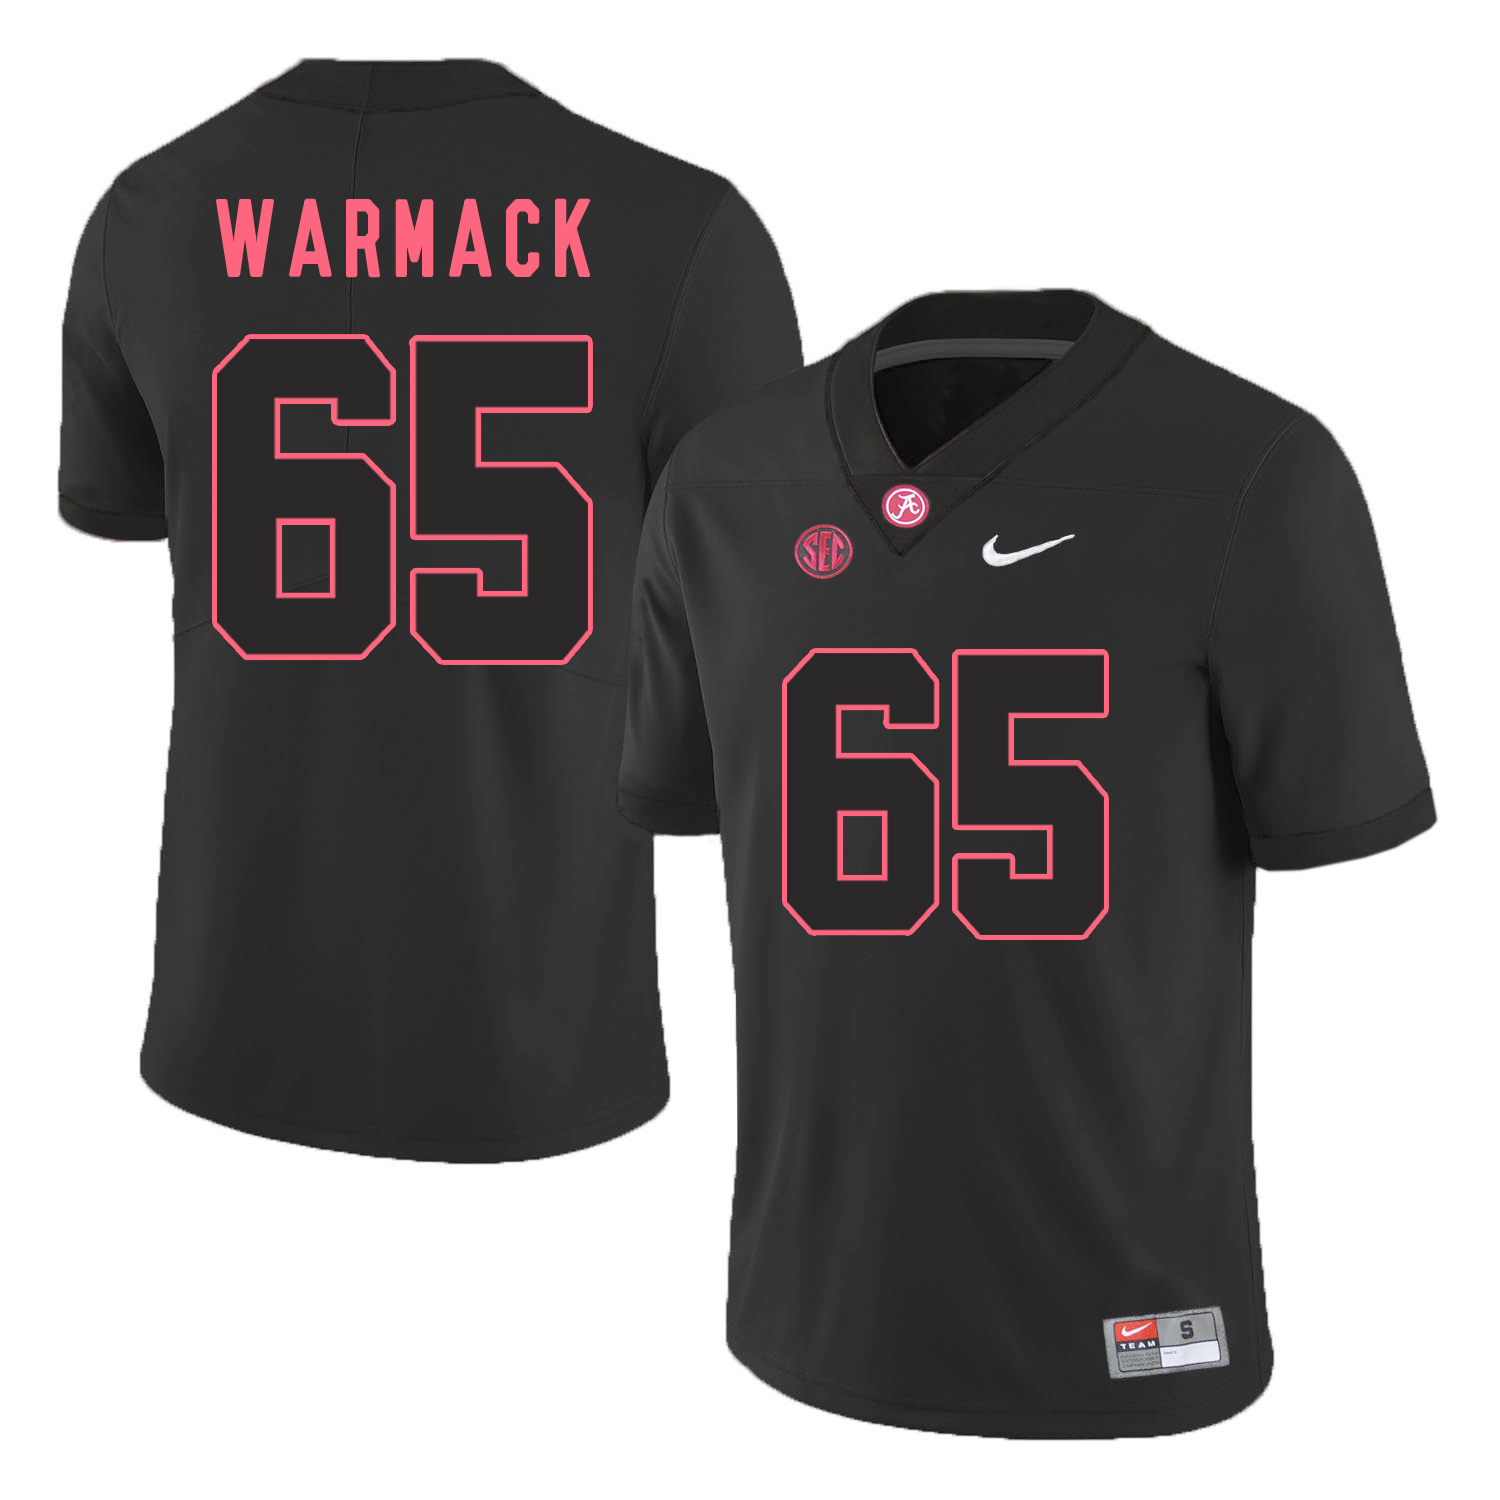 Alabama Crimson Tide 65 Chance Warmack Black College Football Jersey